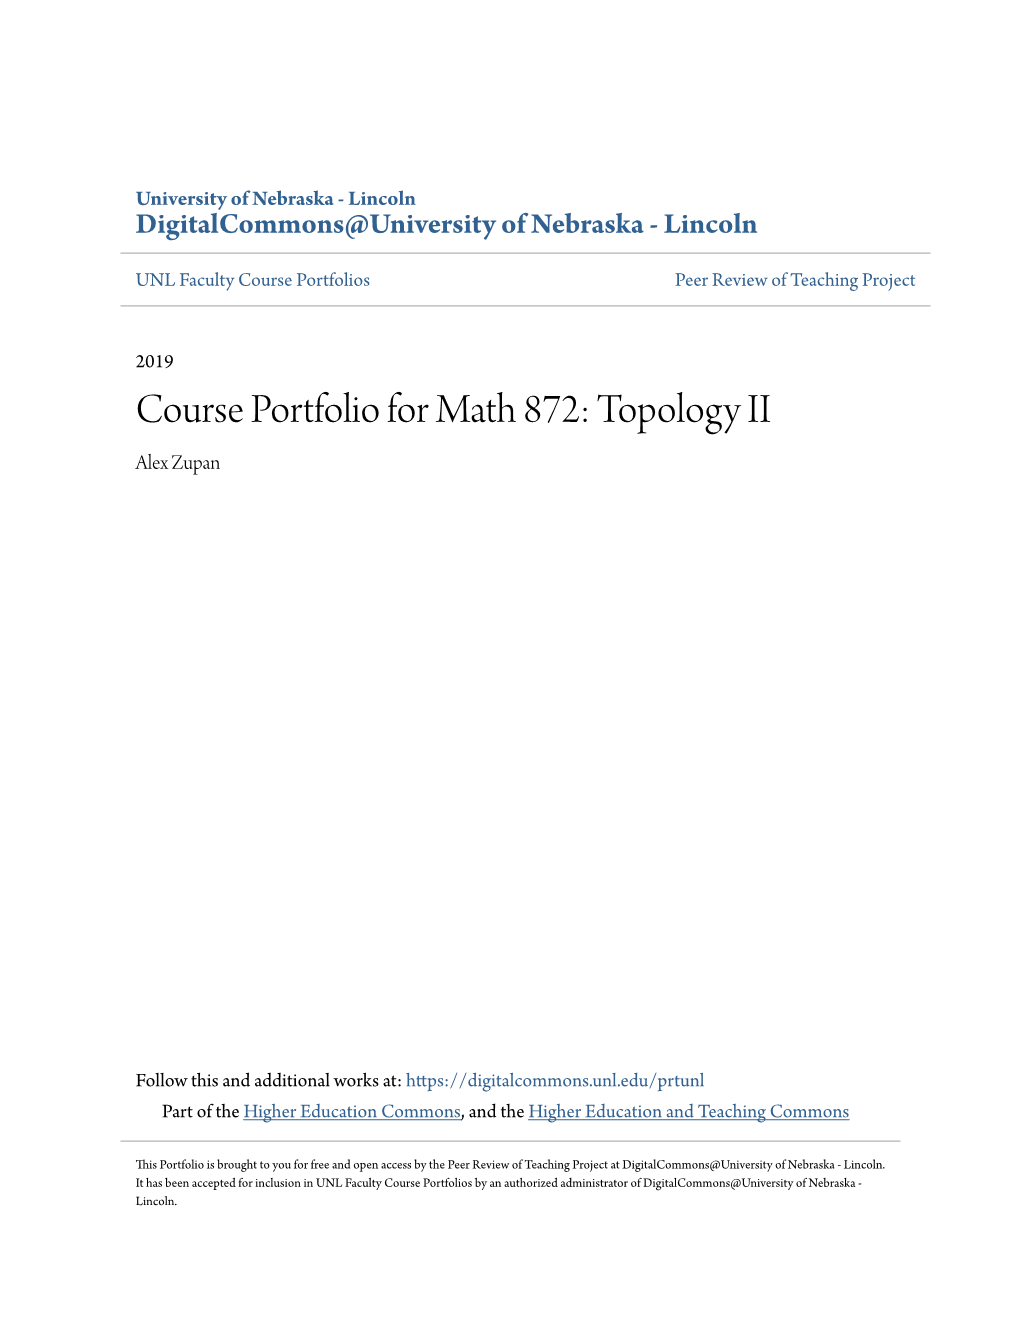 Course Portfolio for Math 872: Topology II Alex Zupan